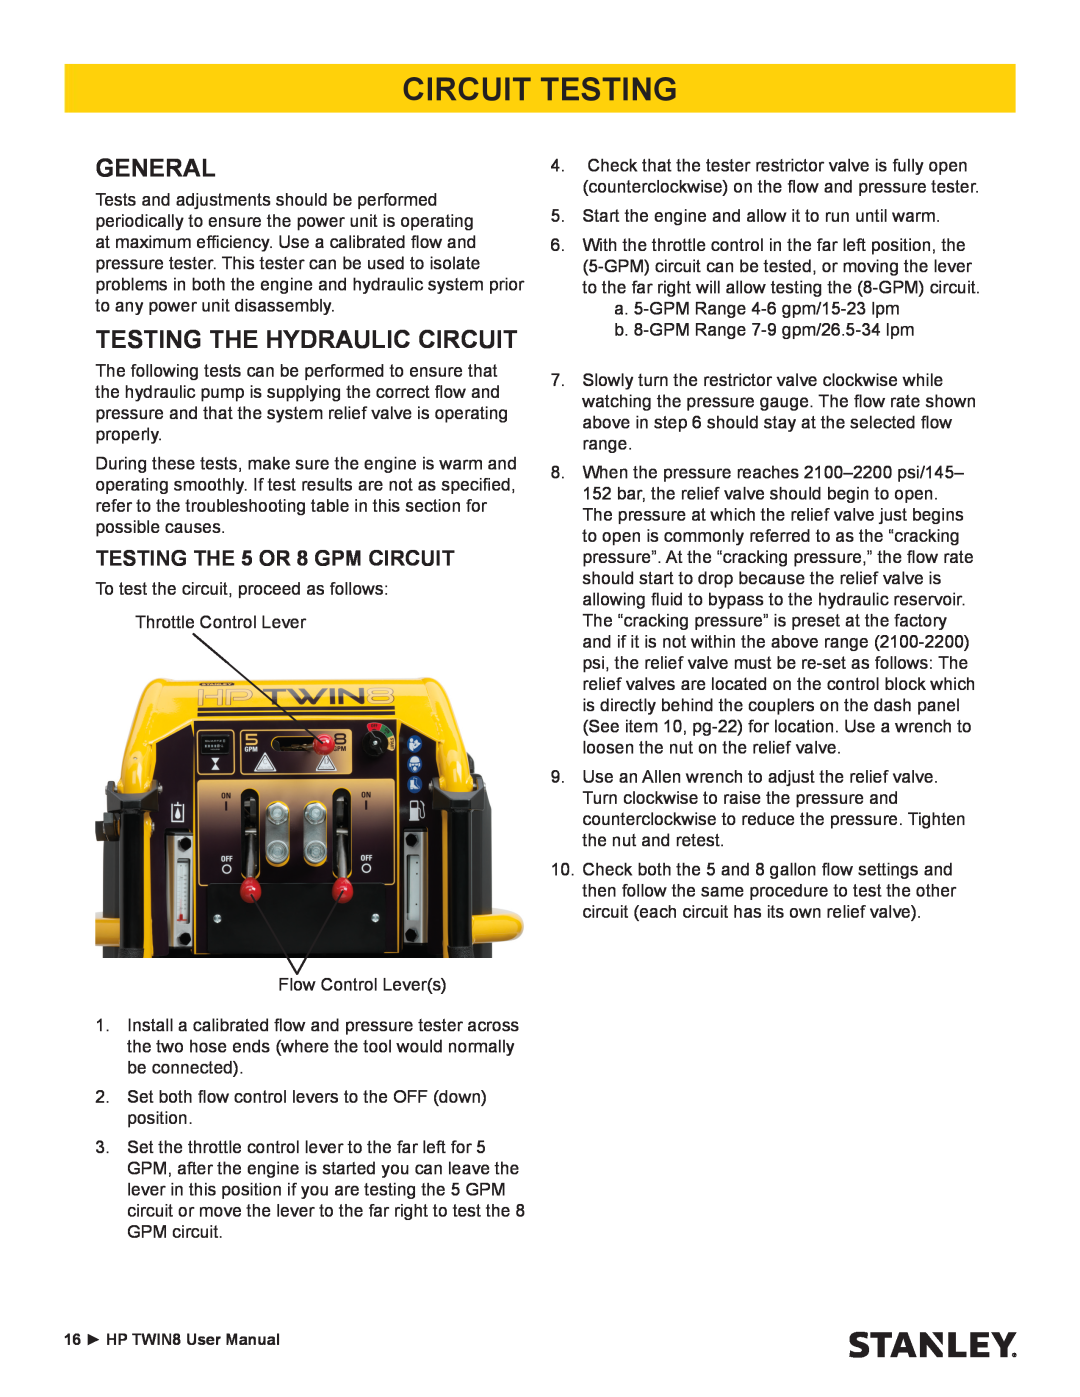 Stanley Black & Decker HP TWIN8 Circuit Testing, General, Testing The Hydraulic Circuit, TESTING THE 5 OR 8 GPM CIRCUIT 